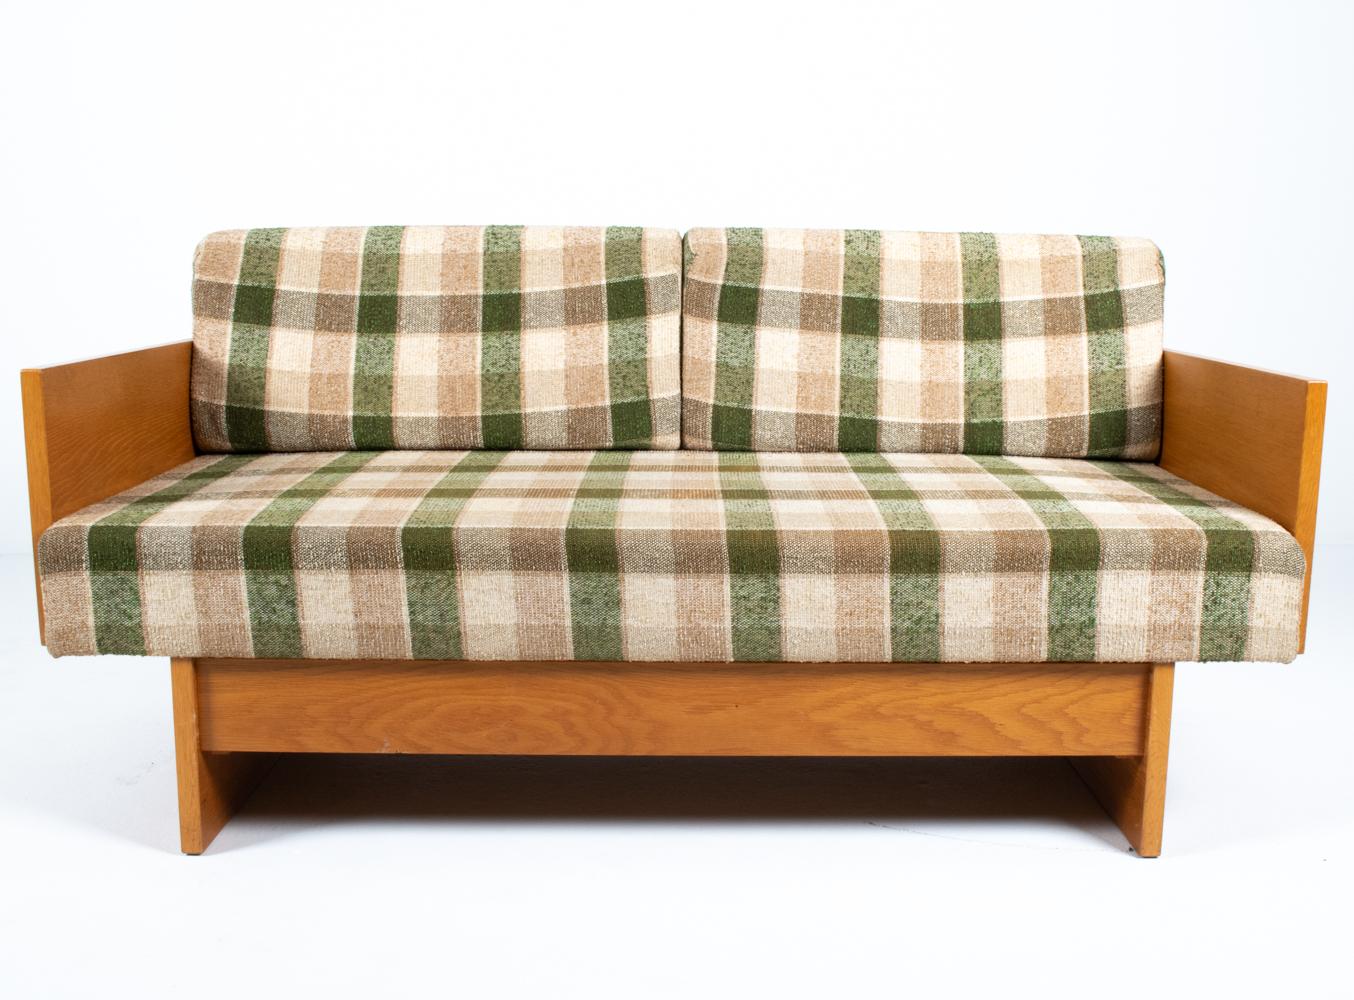 Scandinavian Modern Attr. Borge Mogensen Danish Mid-Century Convertible Daybed Sofa For Sale